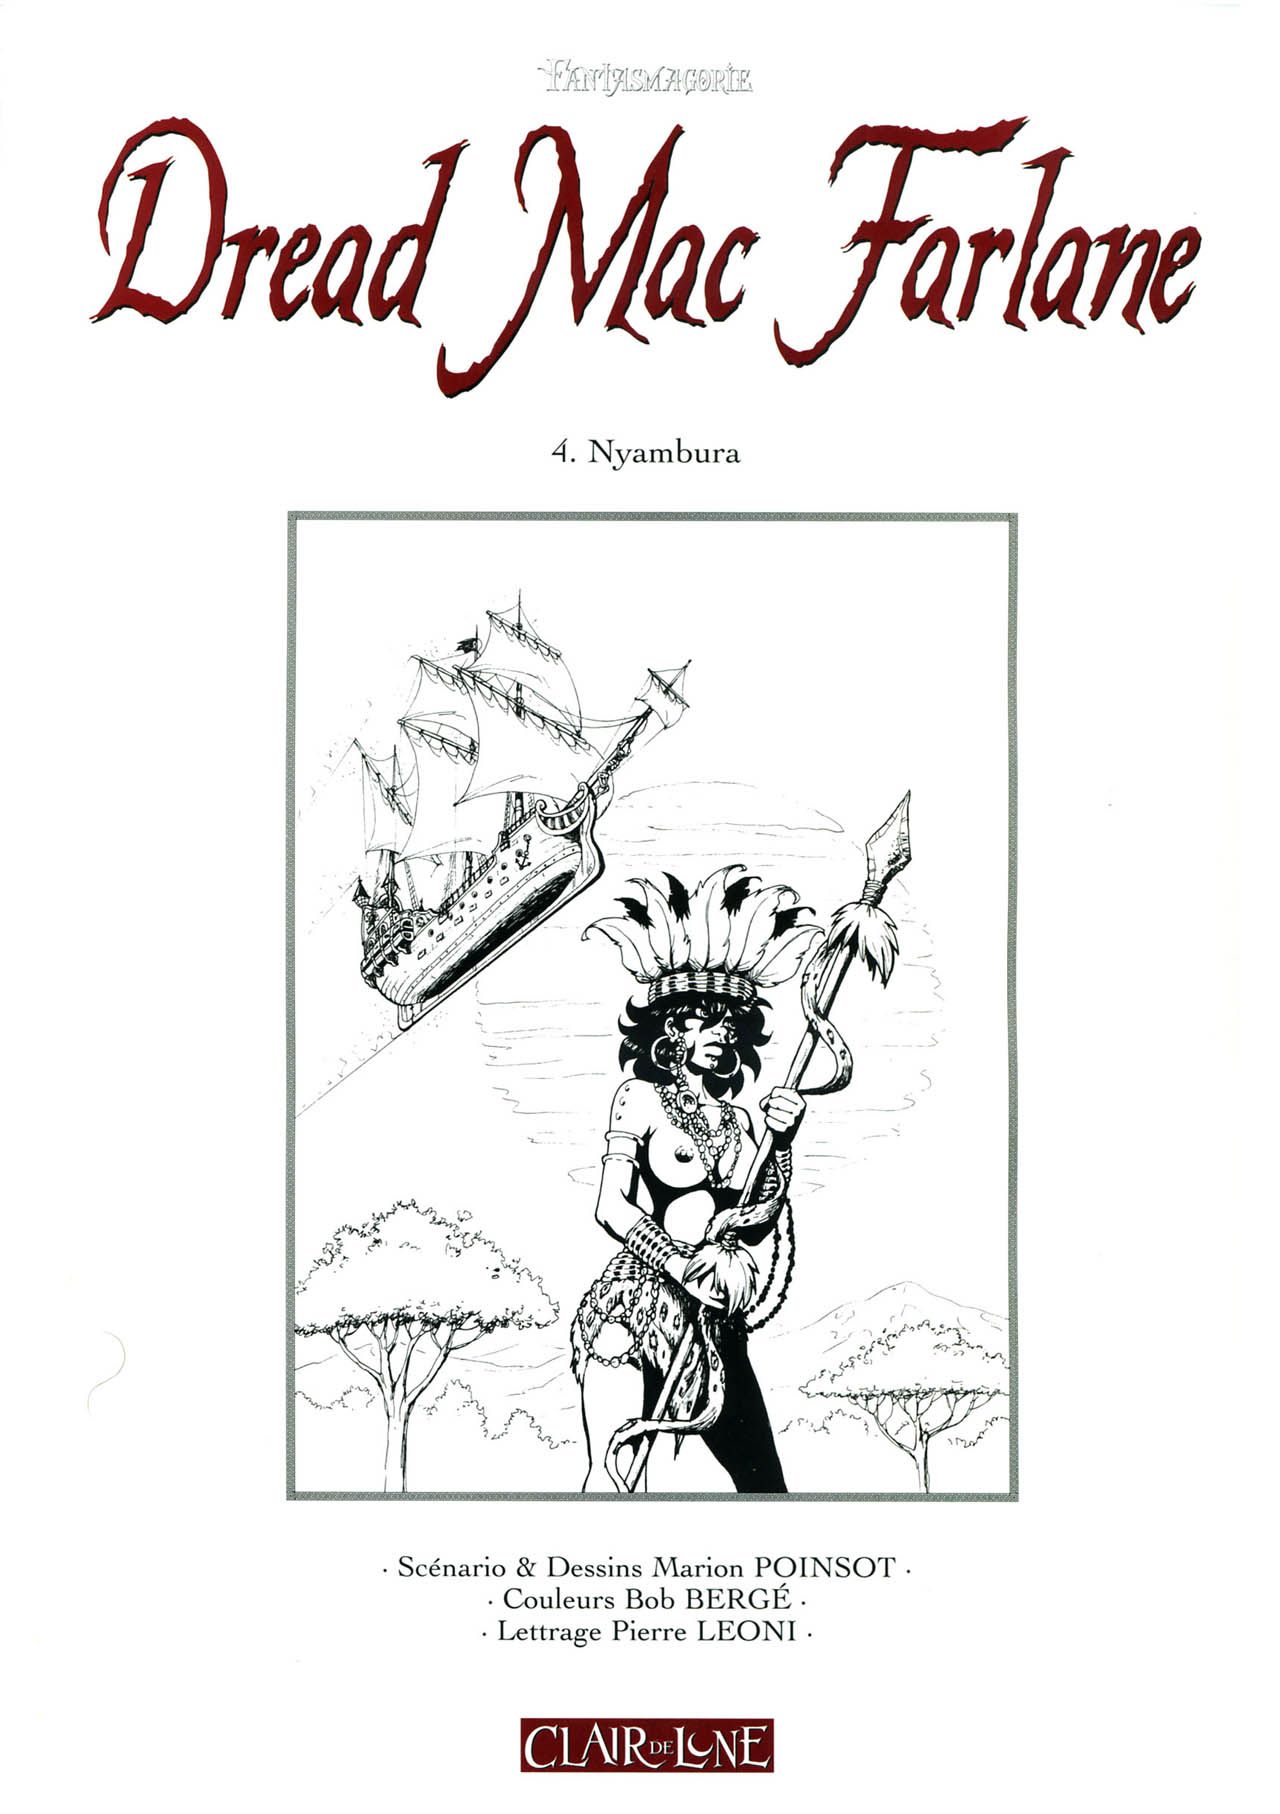 [Marion Poinsot] Dread Mac Farlane #4: Nyambura (Peter Pan) 4